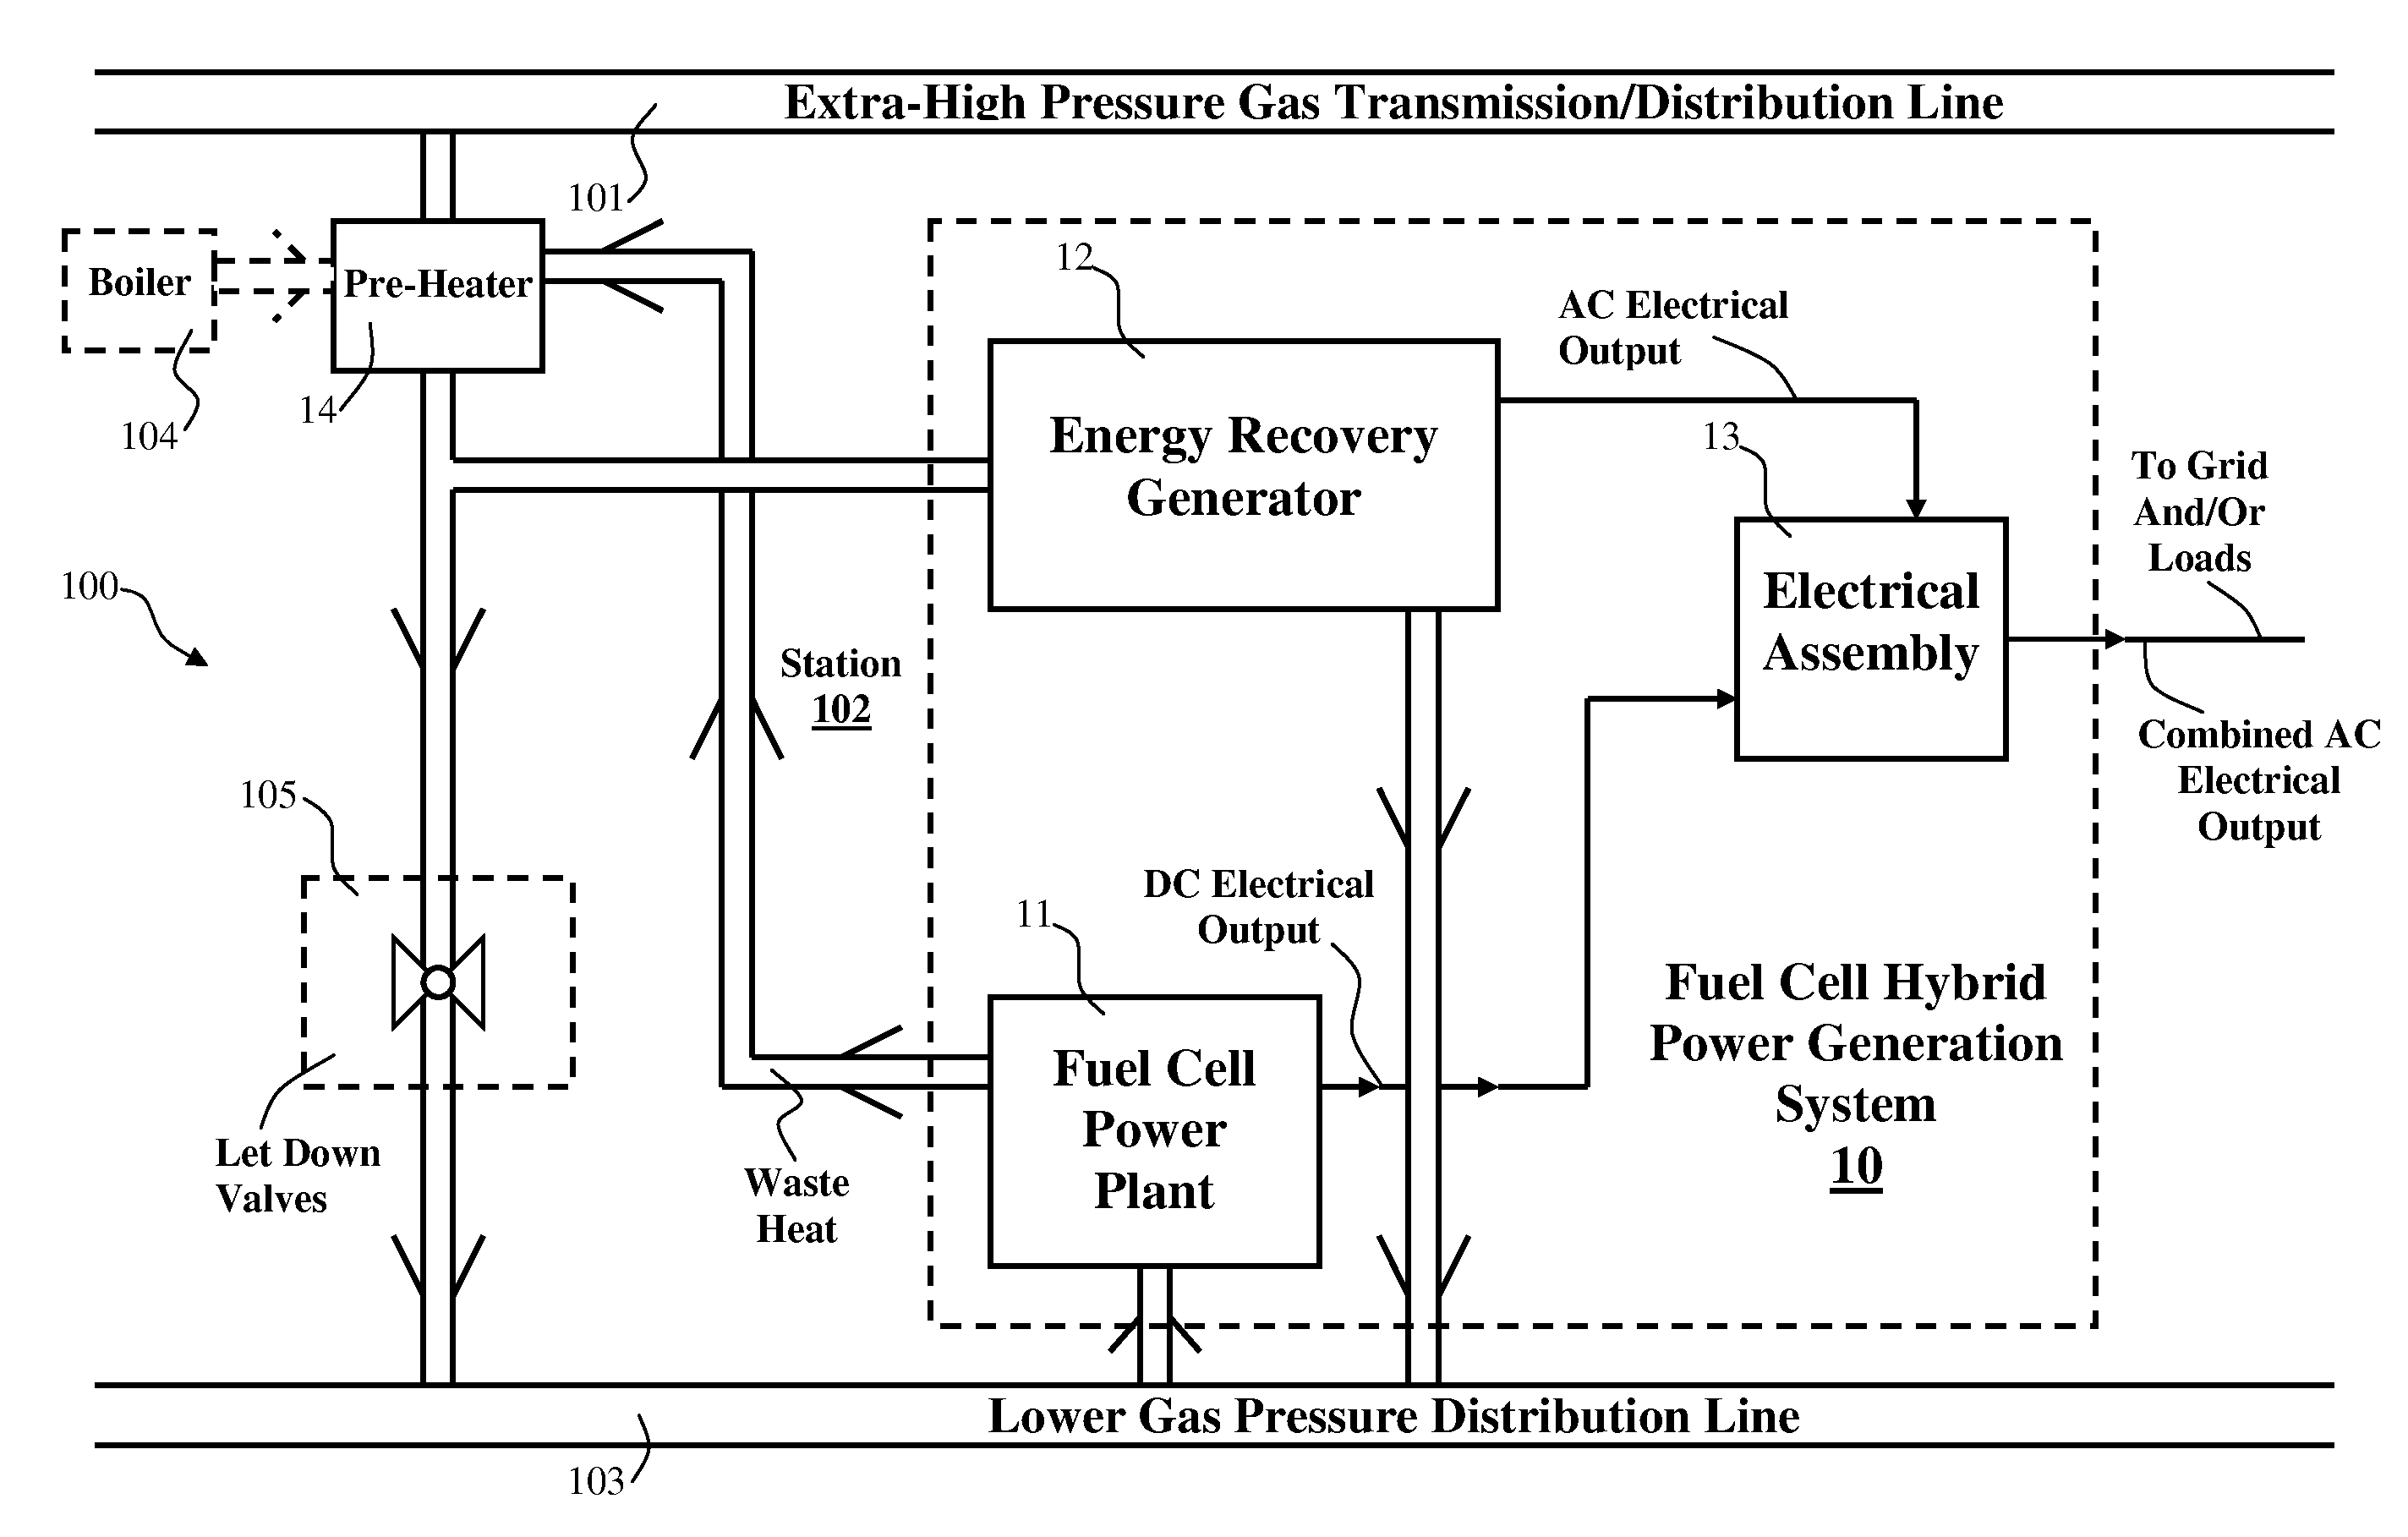 Fuel cell hybrid power generation system